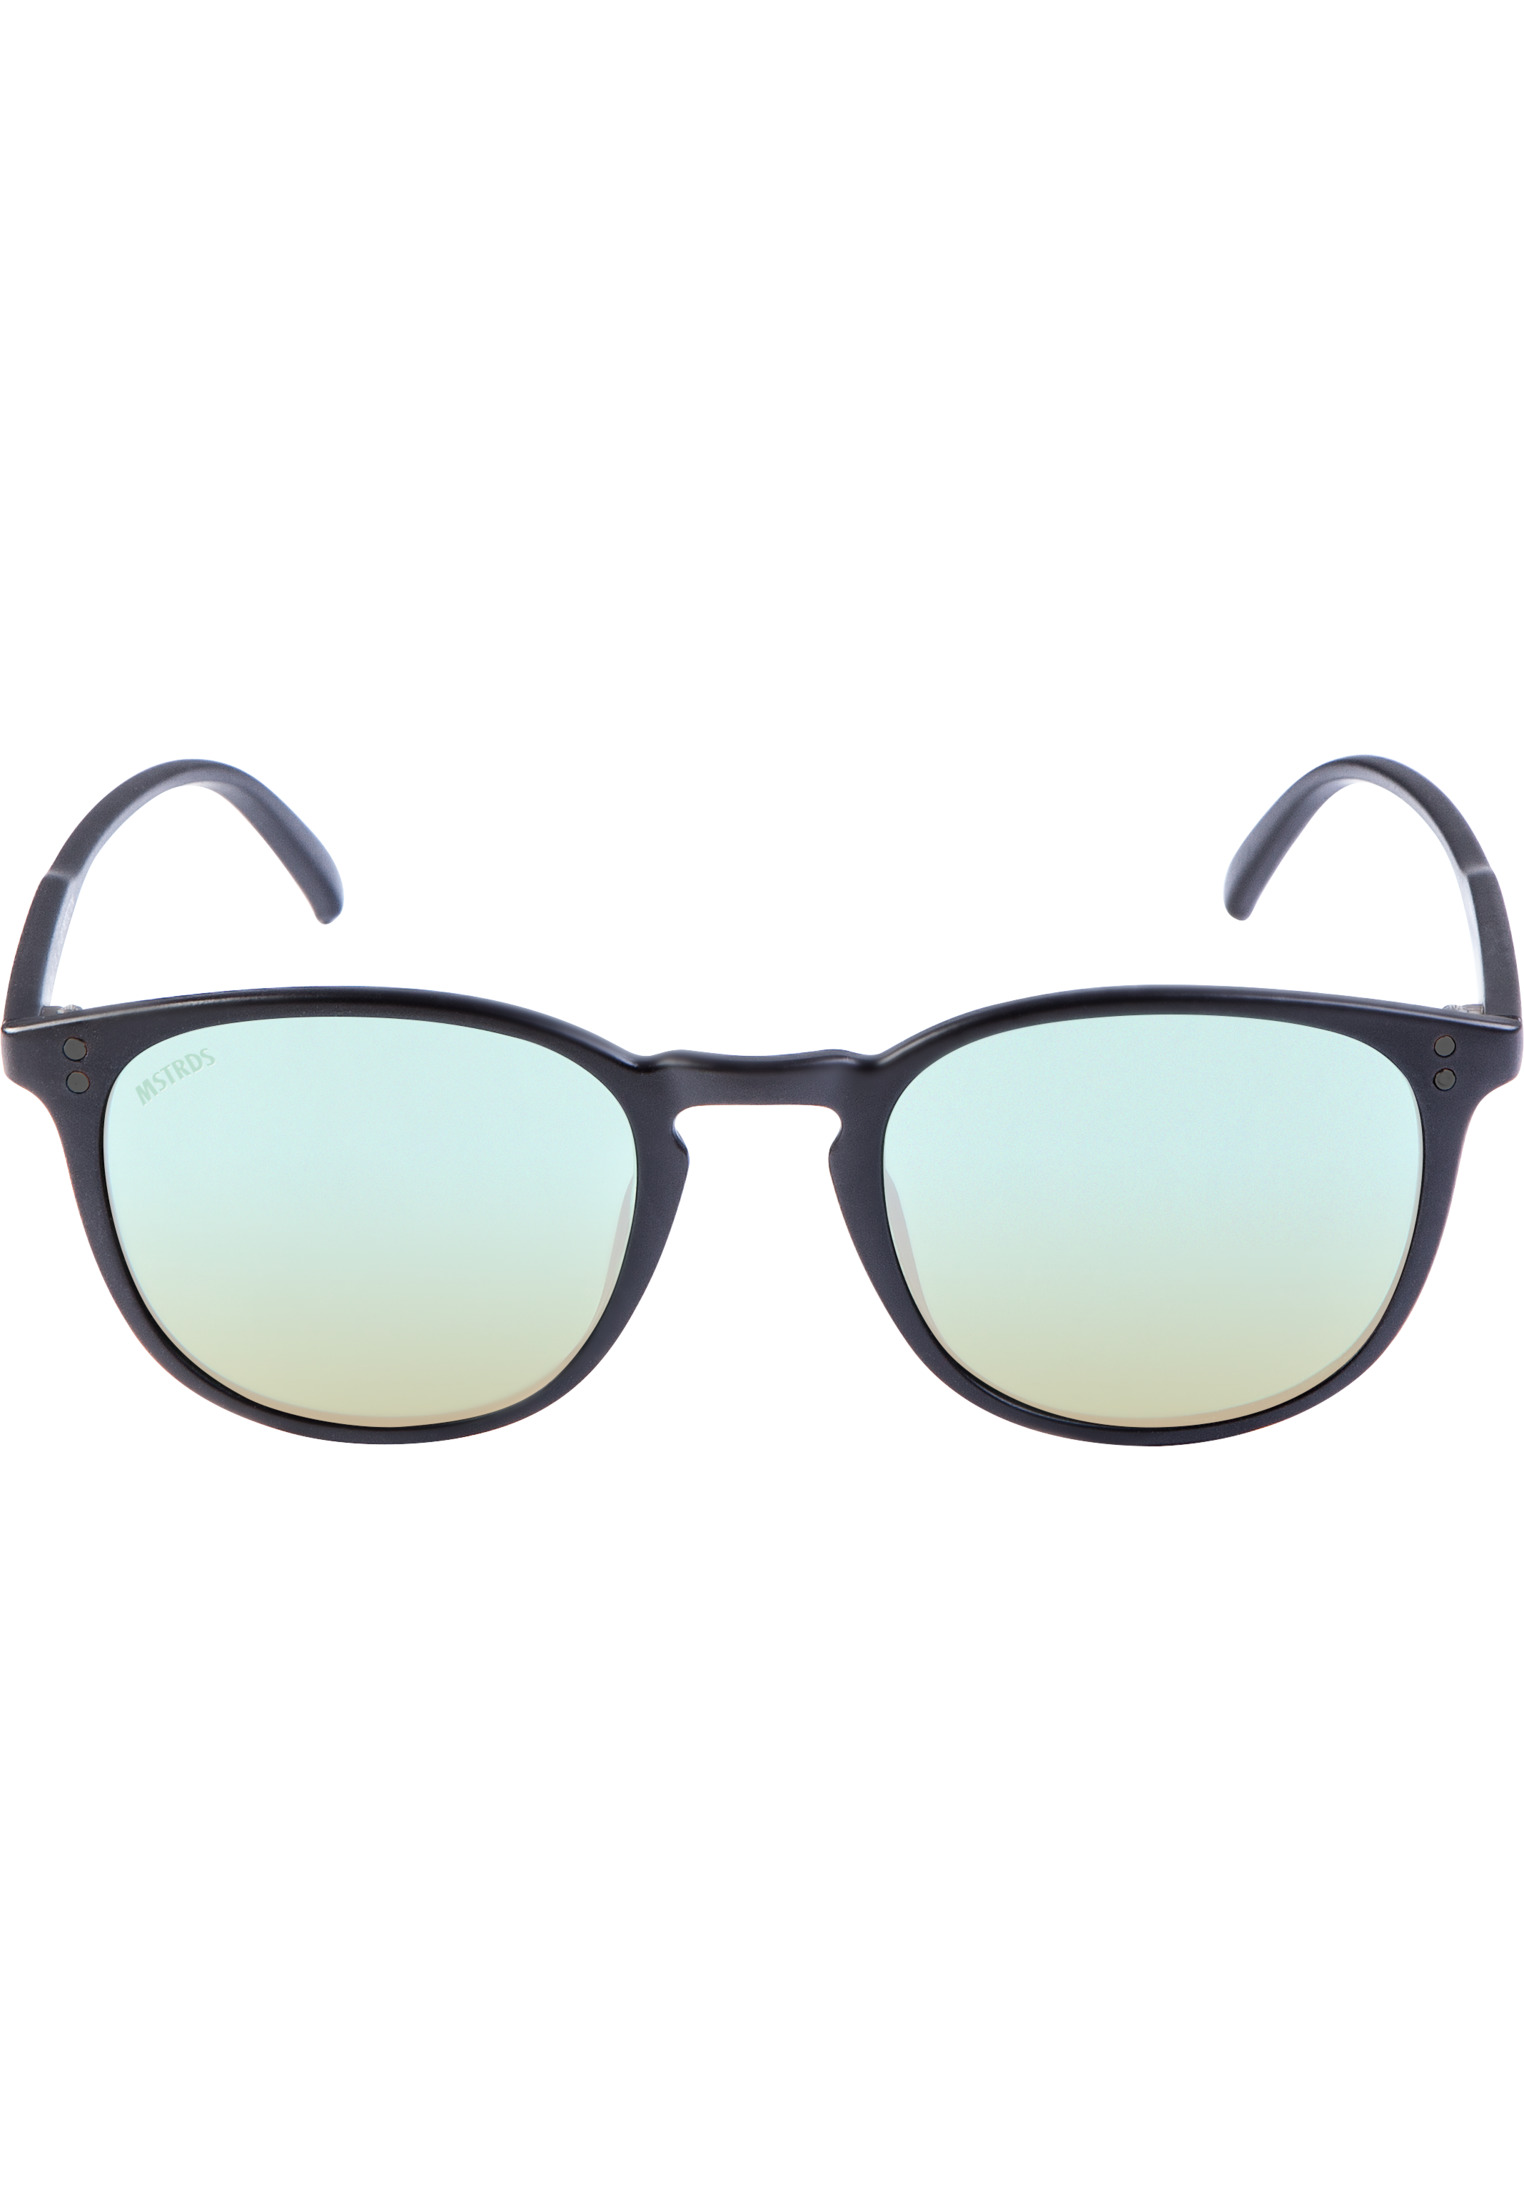 Sunglasses Arthur blk/blue